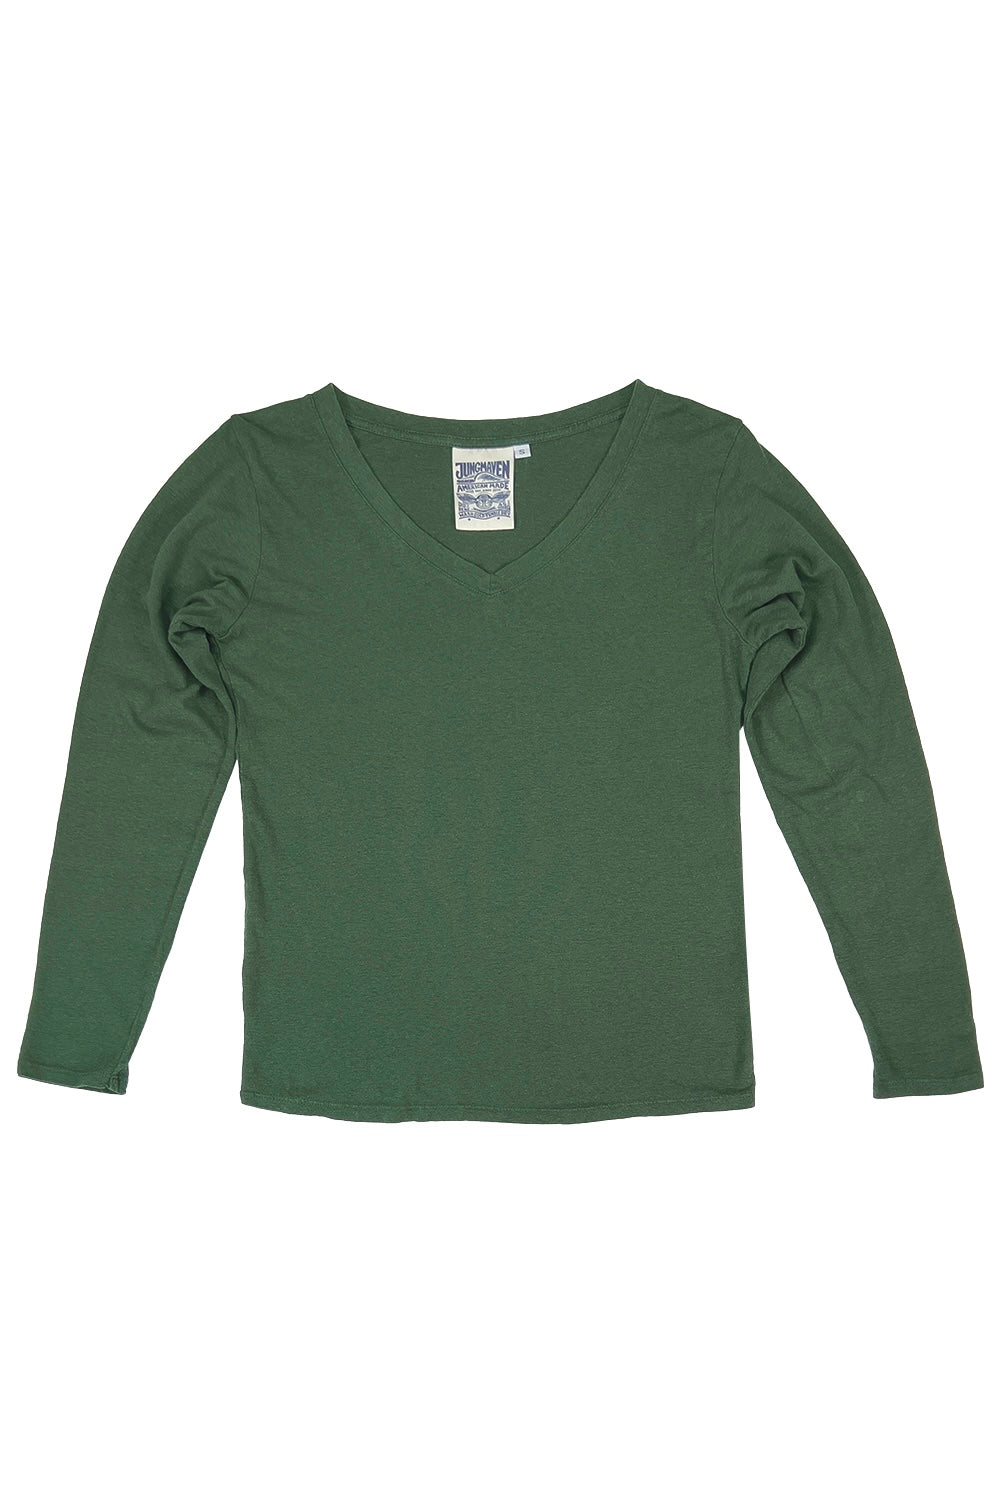 Finch Long Sleeve V-neck | Jungmaven Hemp Clothing & Accessories / Color: Hunter Green